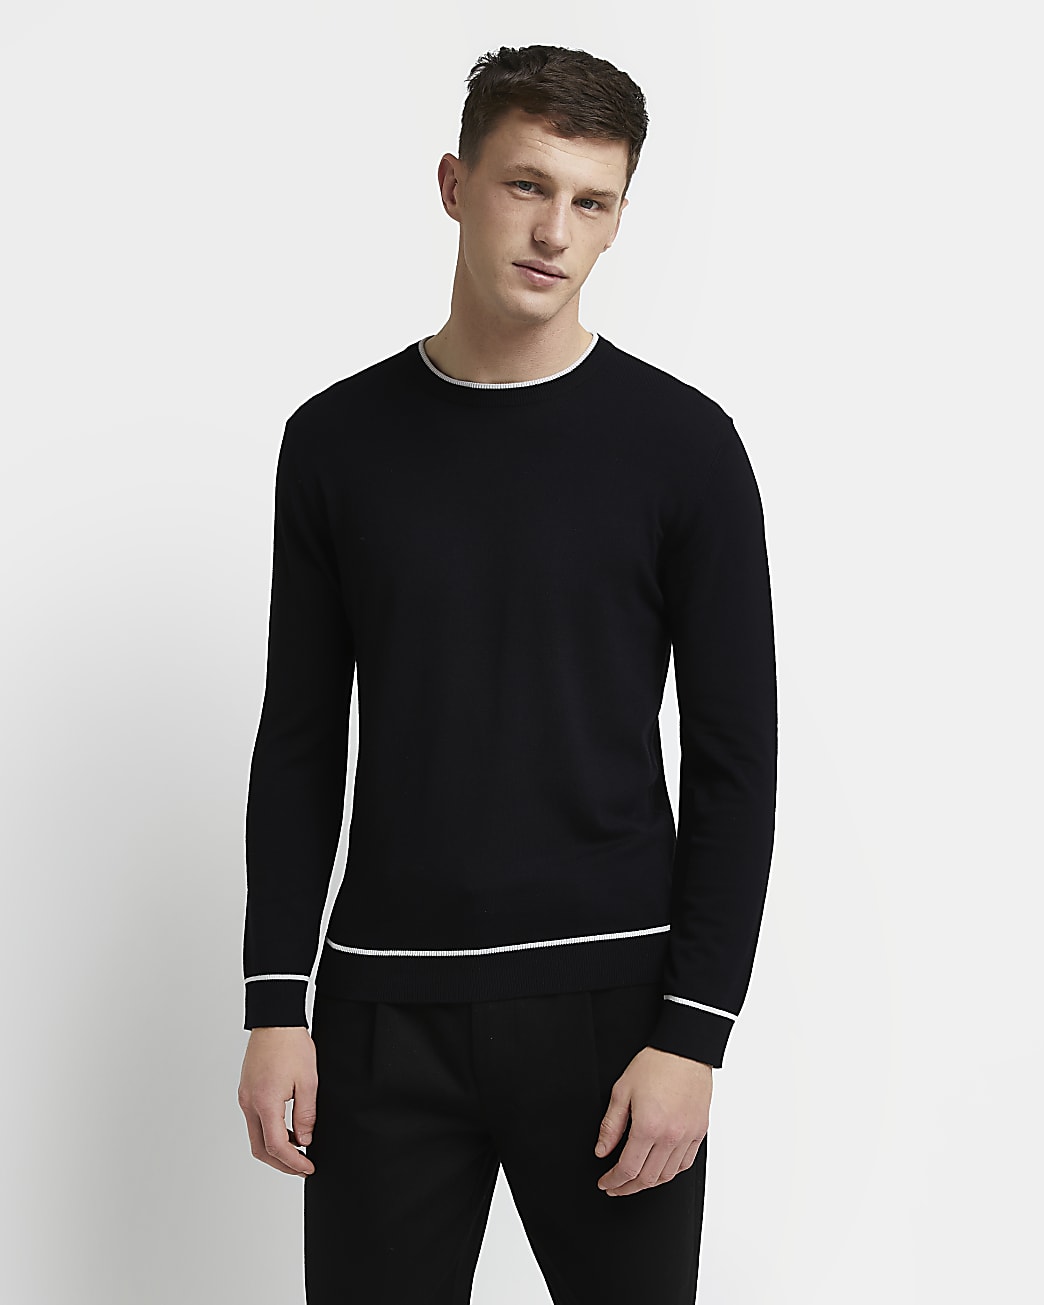 Black slim fit essential tipped jumper